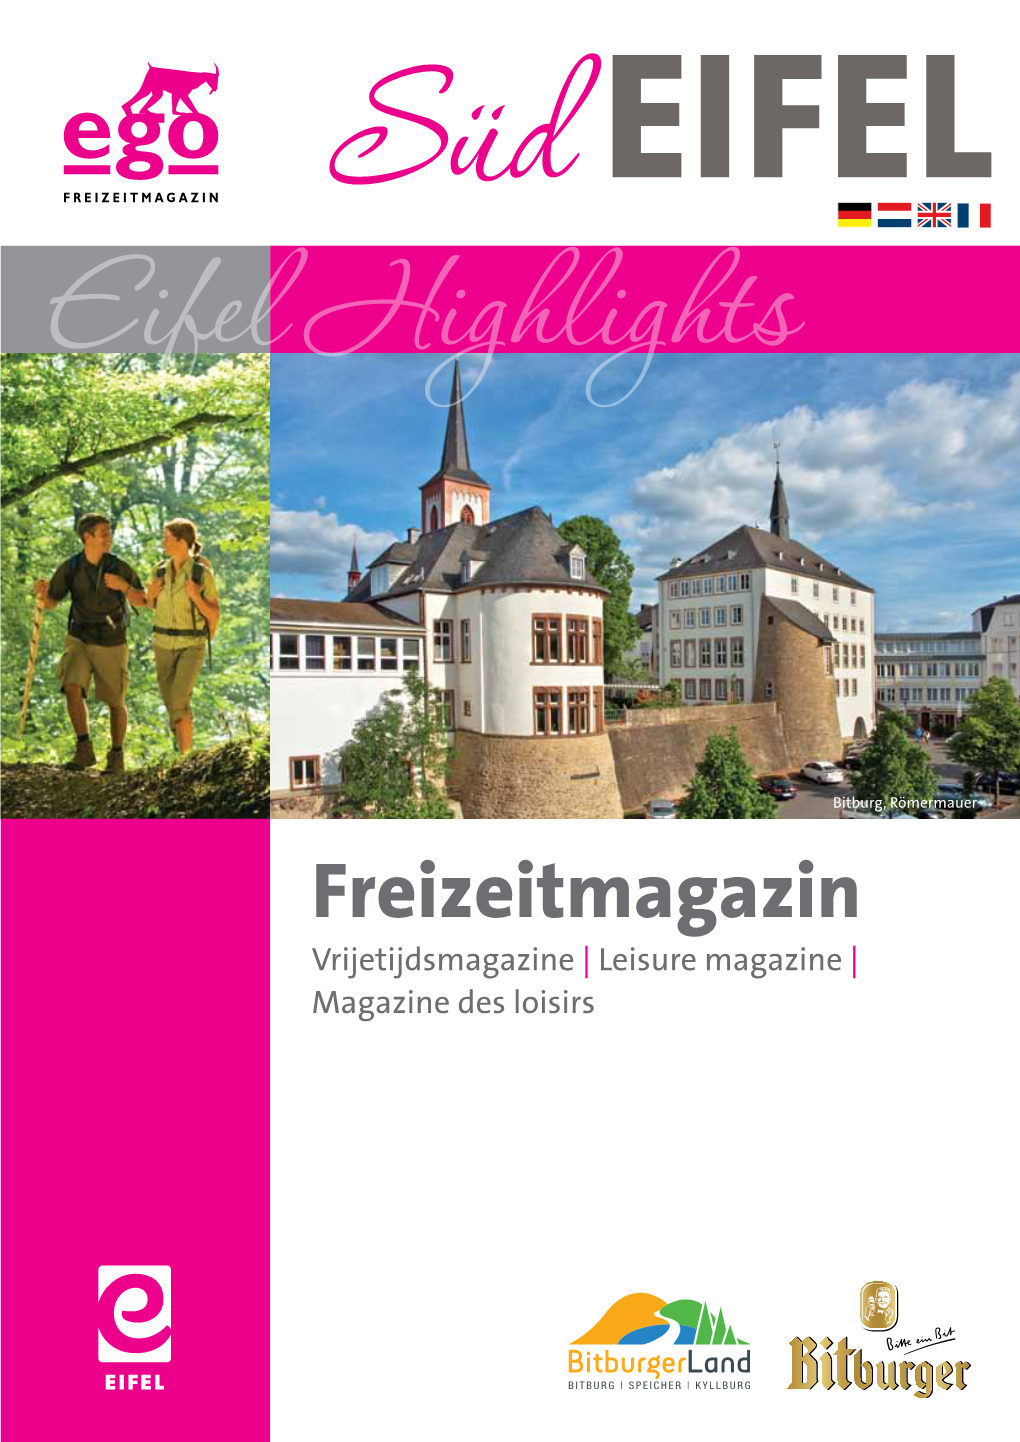 Ego Freizeitmagazin No. 30